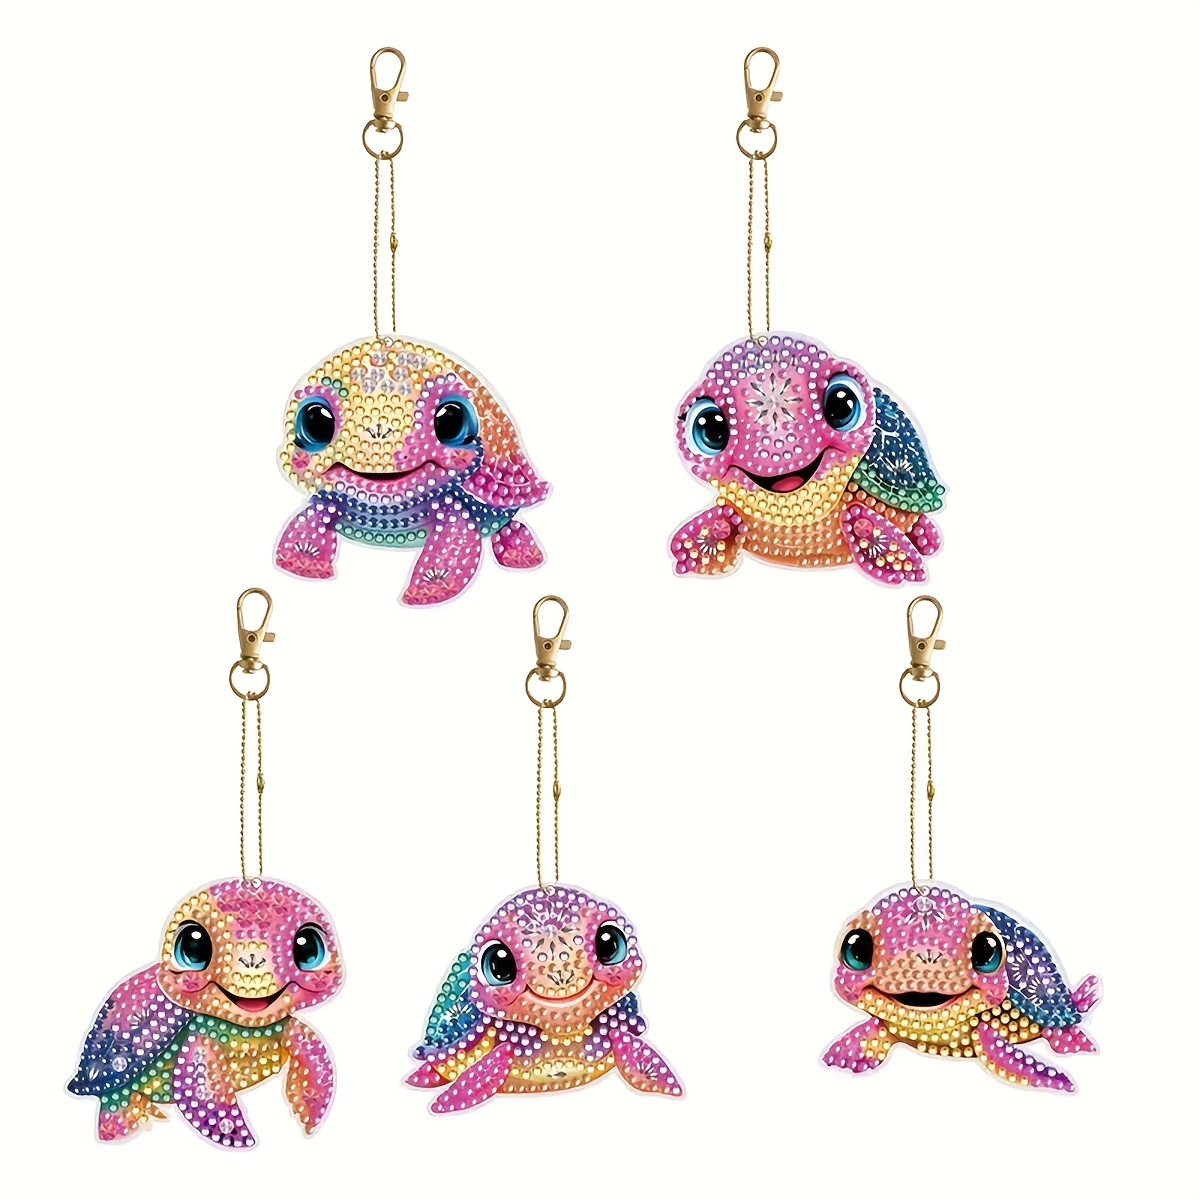 

5pcs 5d Turtle Keychain - Diy Jewelry Painting Kit With Bright Diamonds - Unique Decorative Pendant